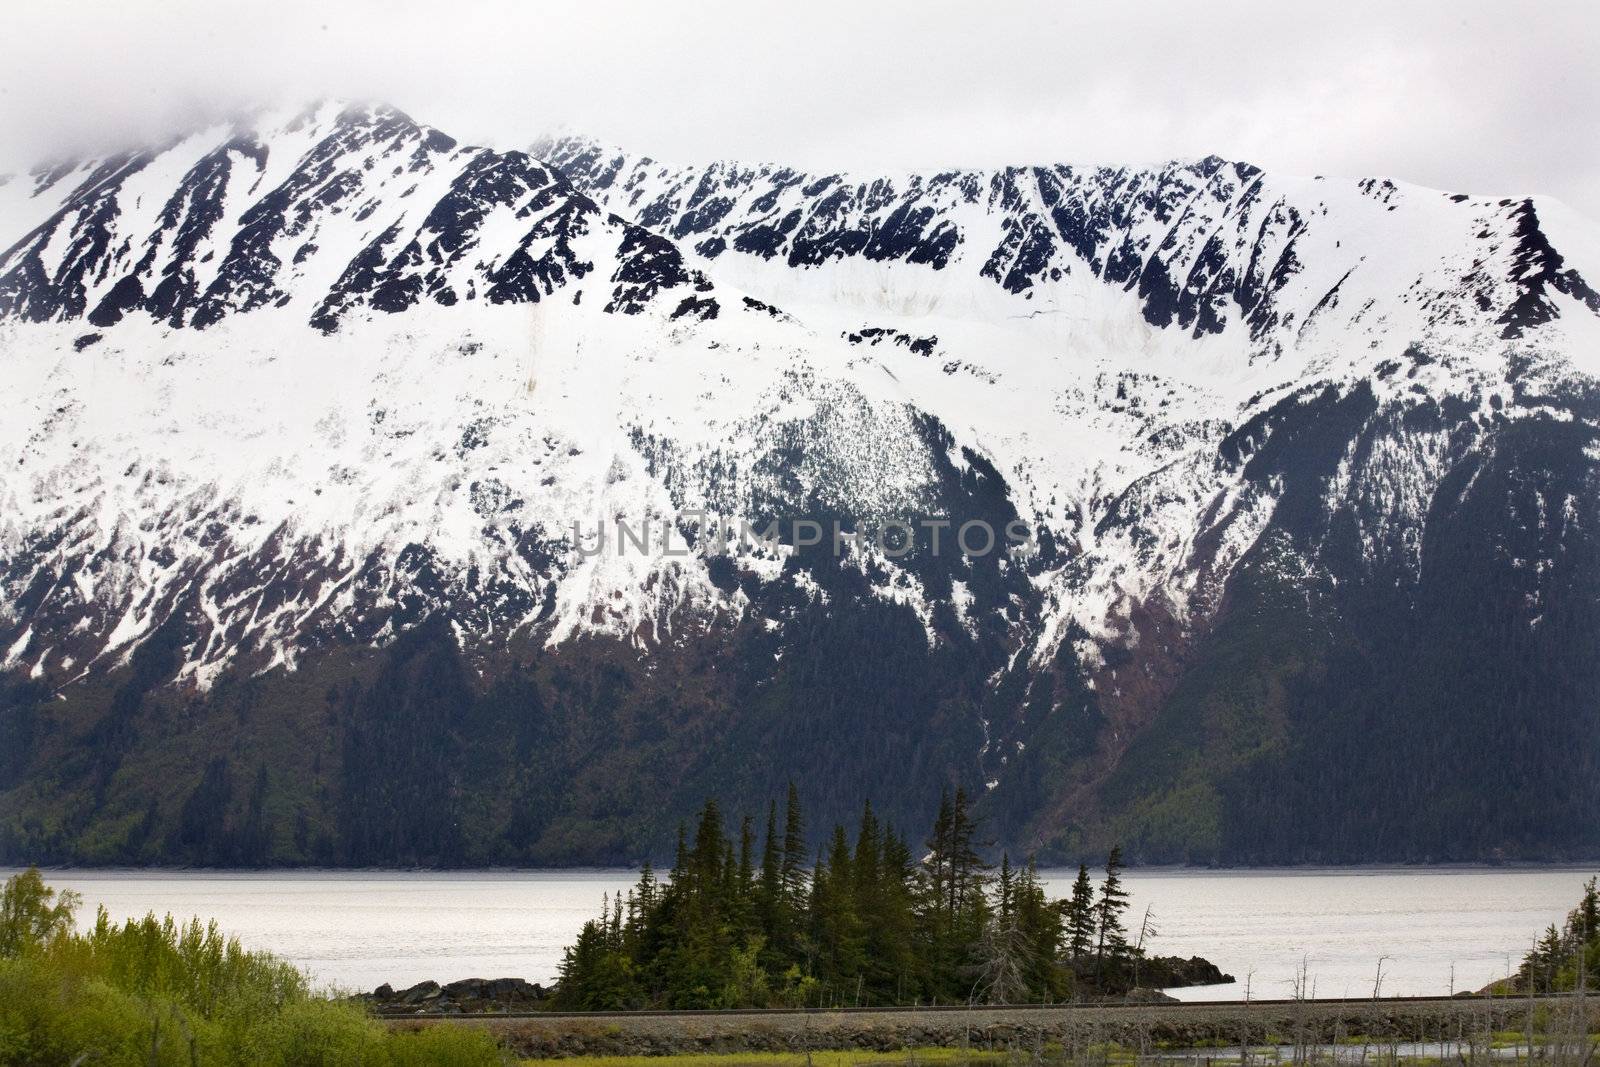 Snow Mountains Close Up Trees, Island, Ocean and Coastline, Seward Highway, Anchorage, Alaska

